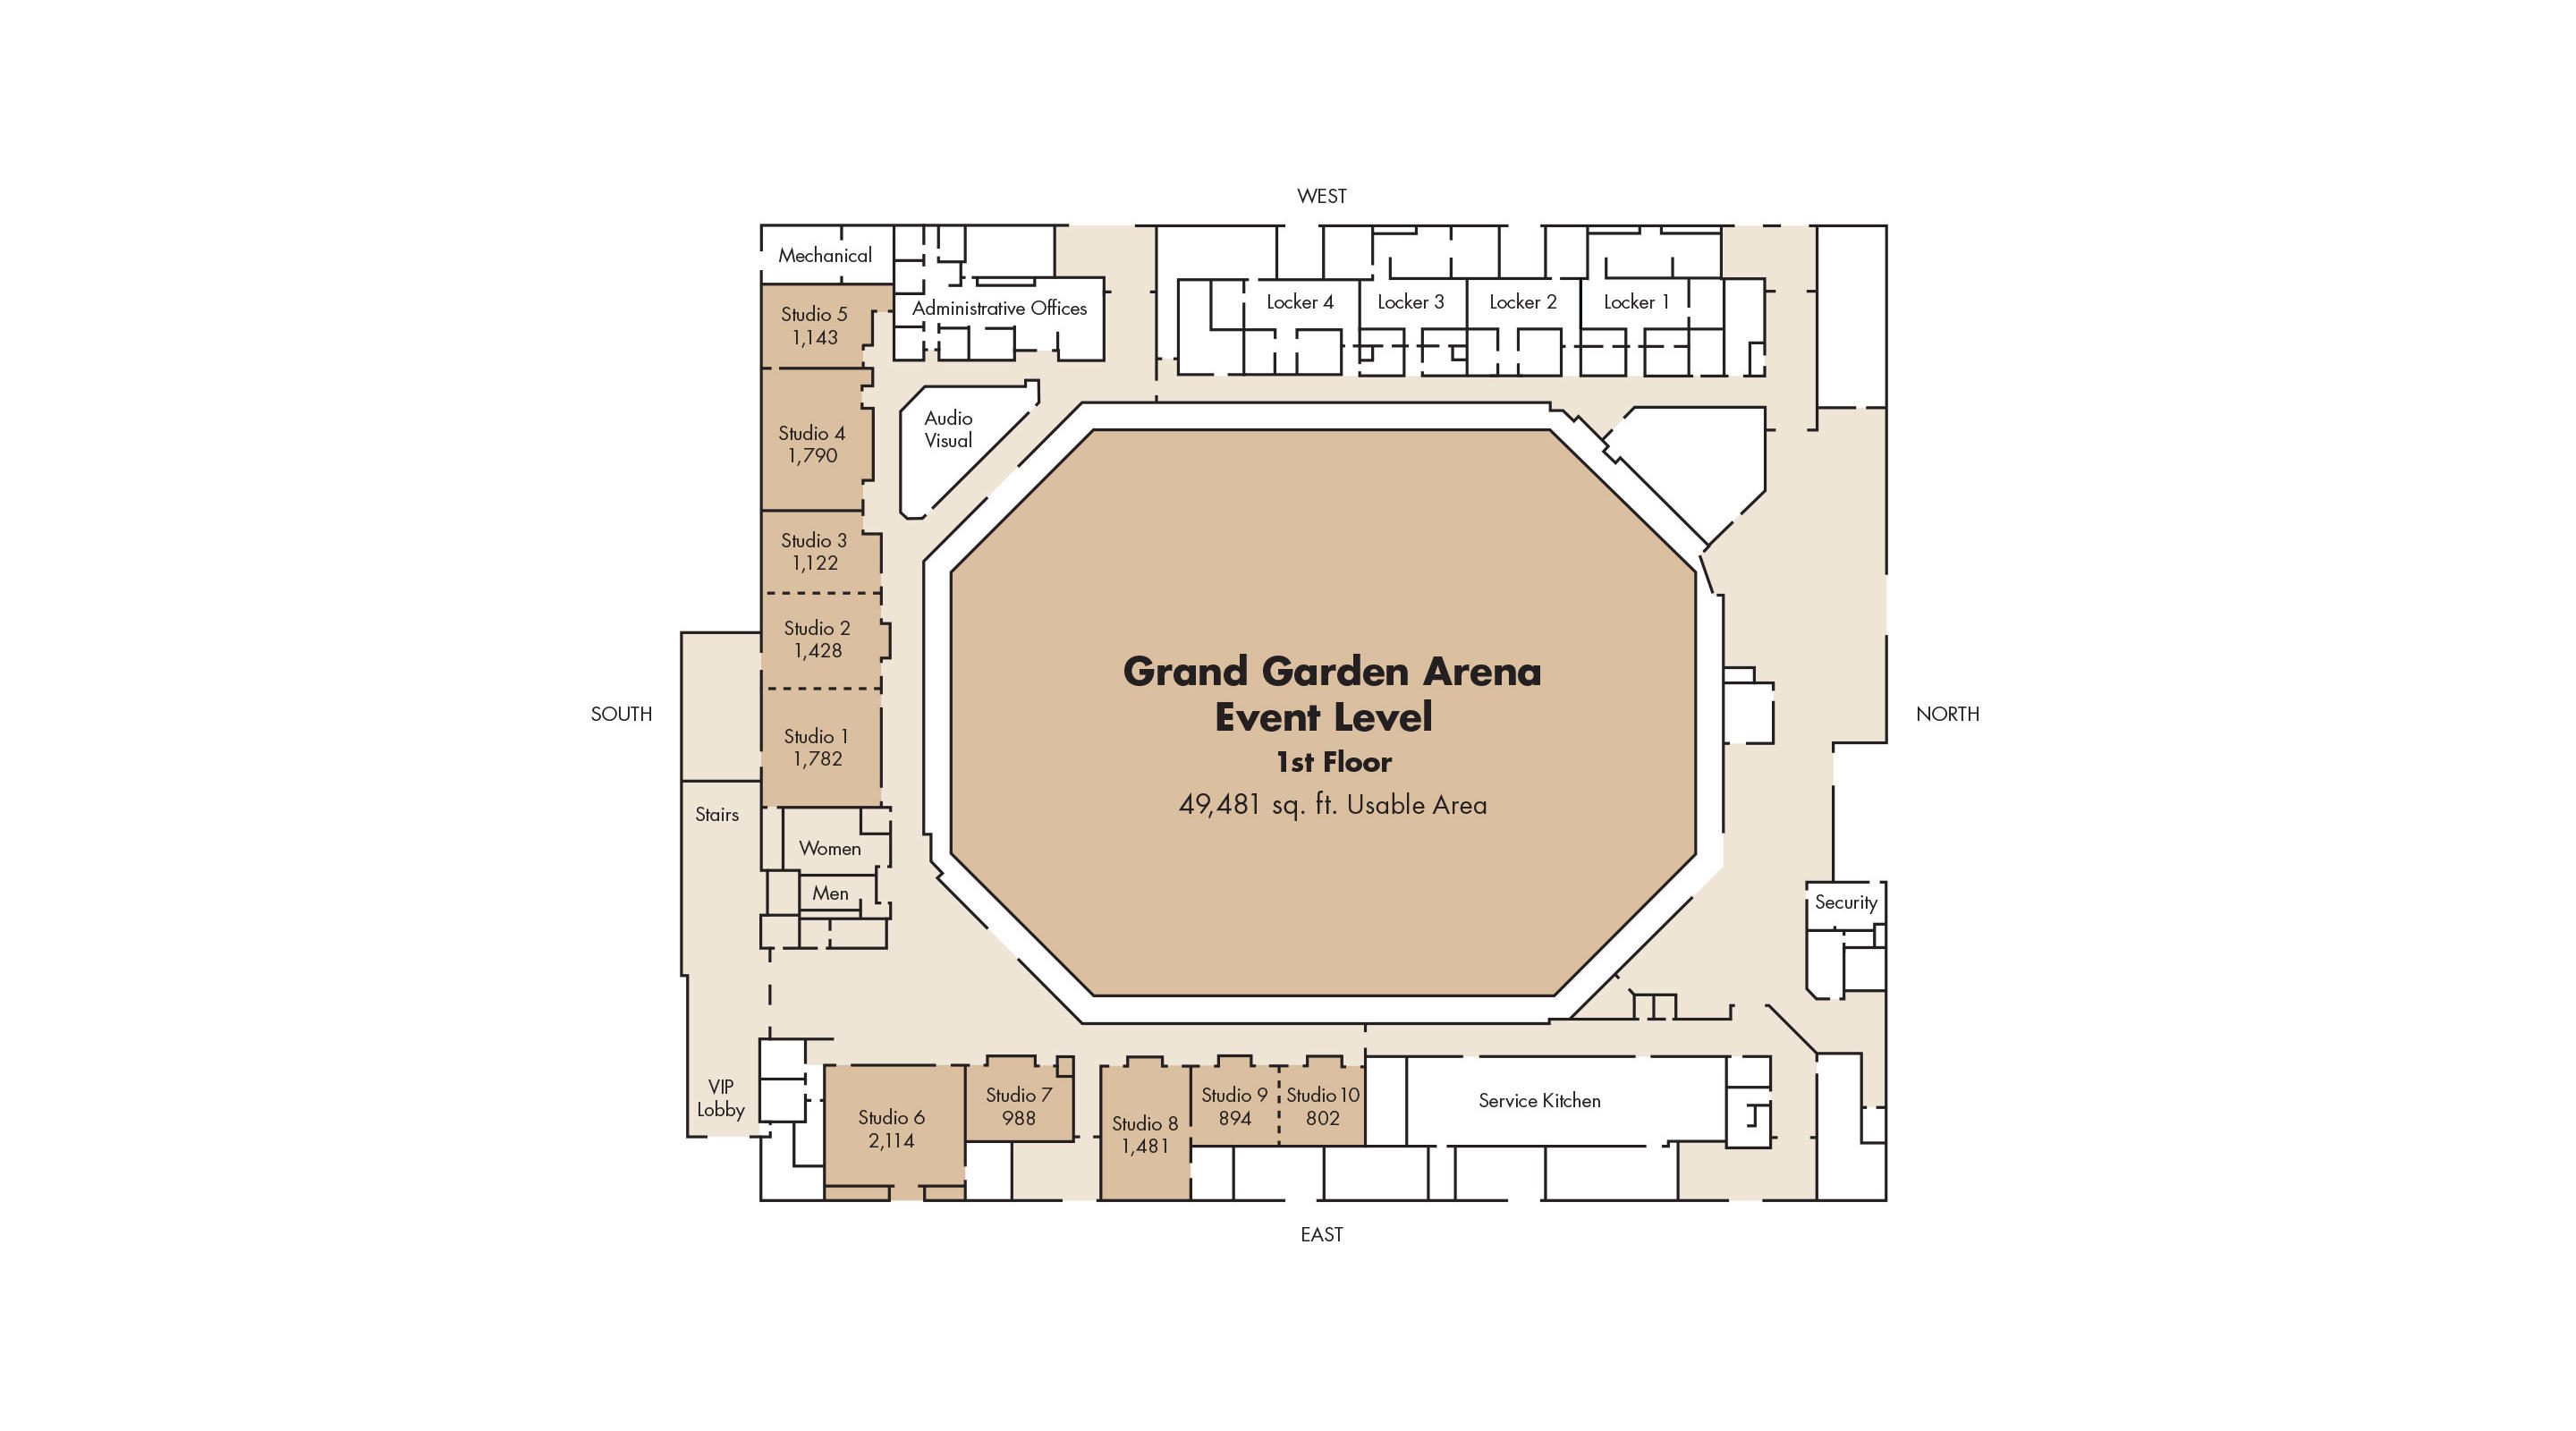 Mgm Grand Meetings Meeting Map Diagram Grand Garden Main @2x 